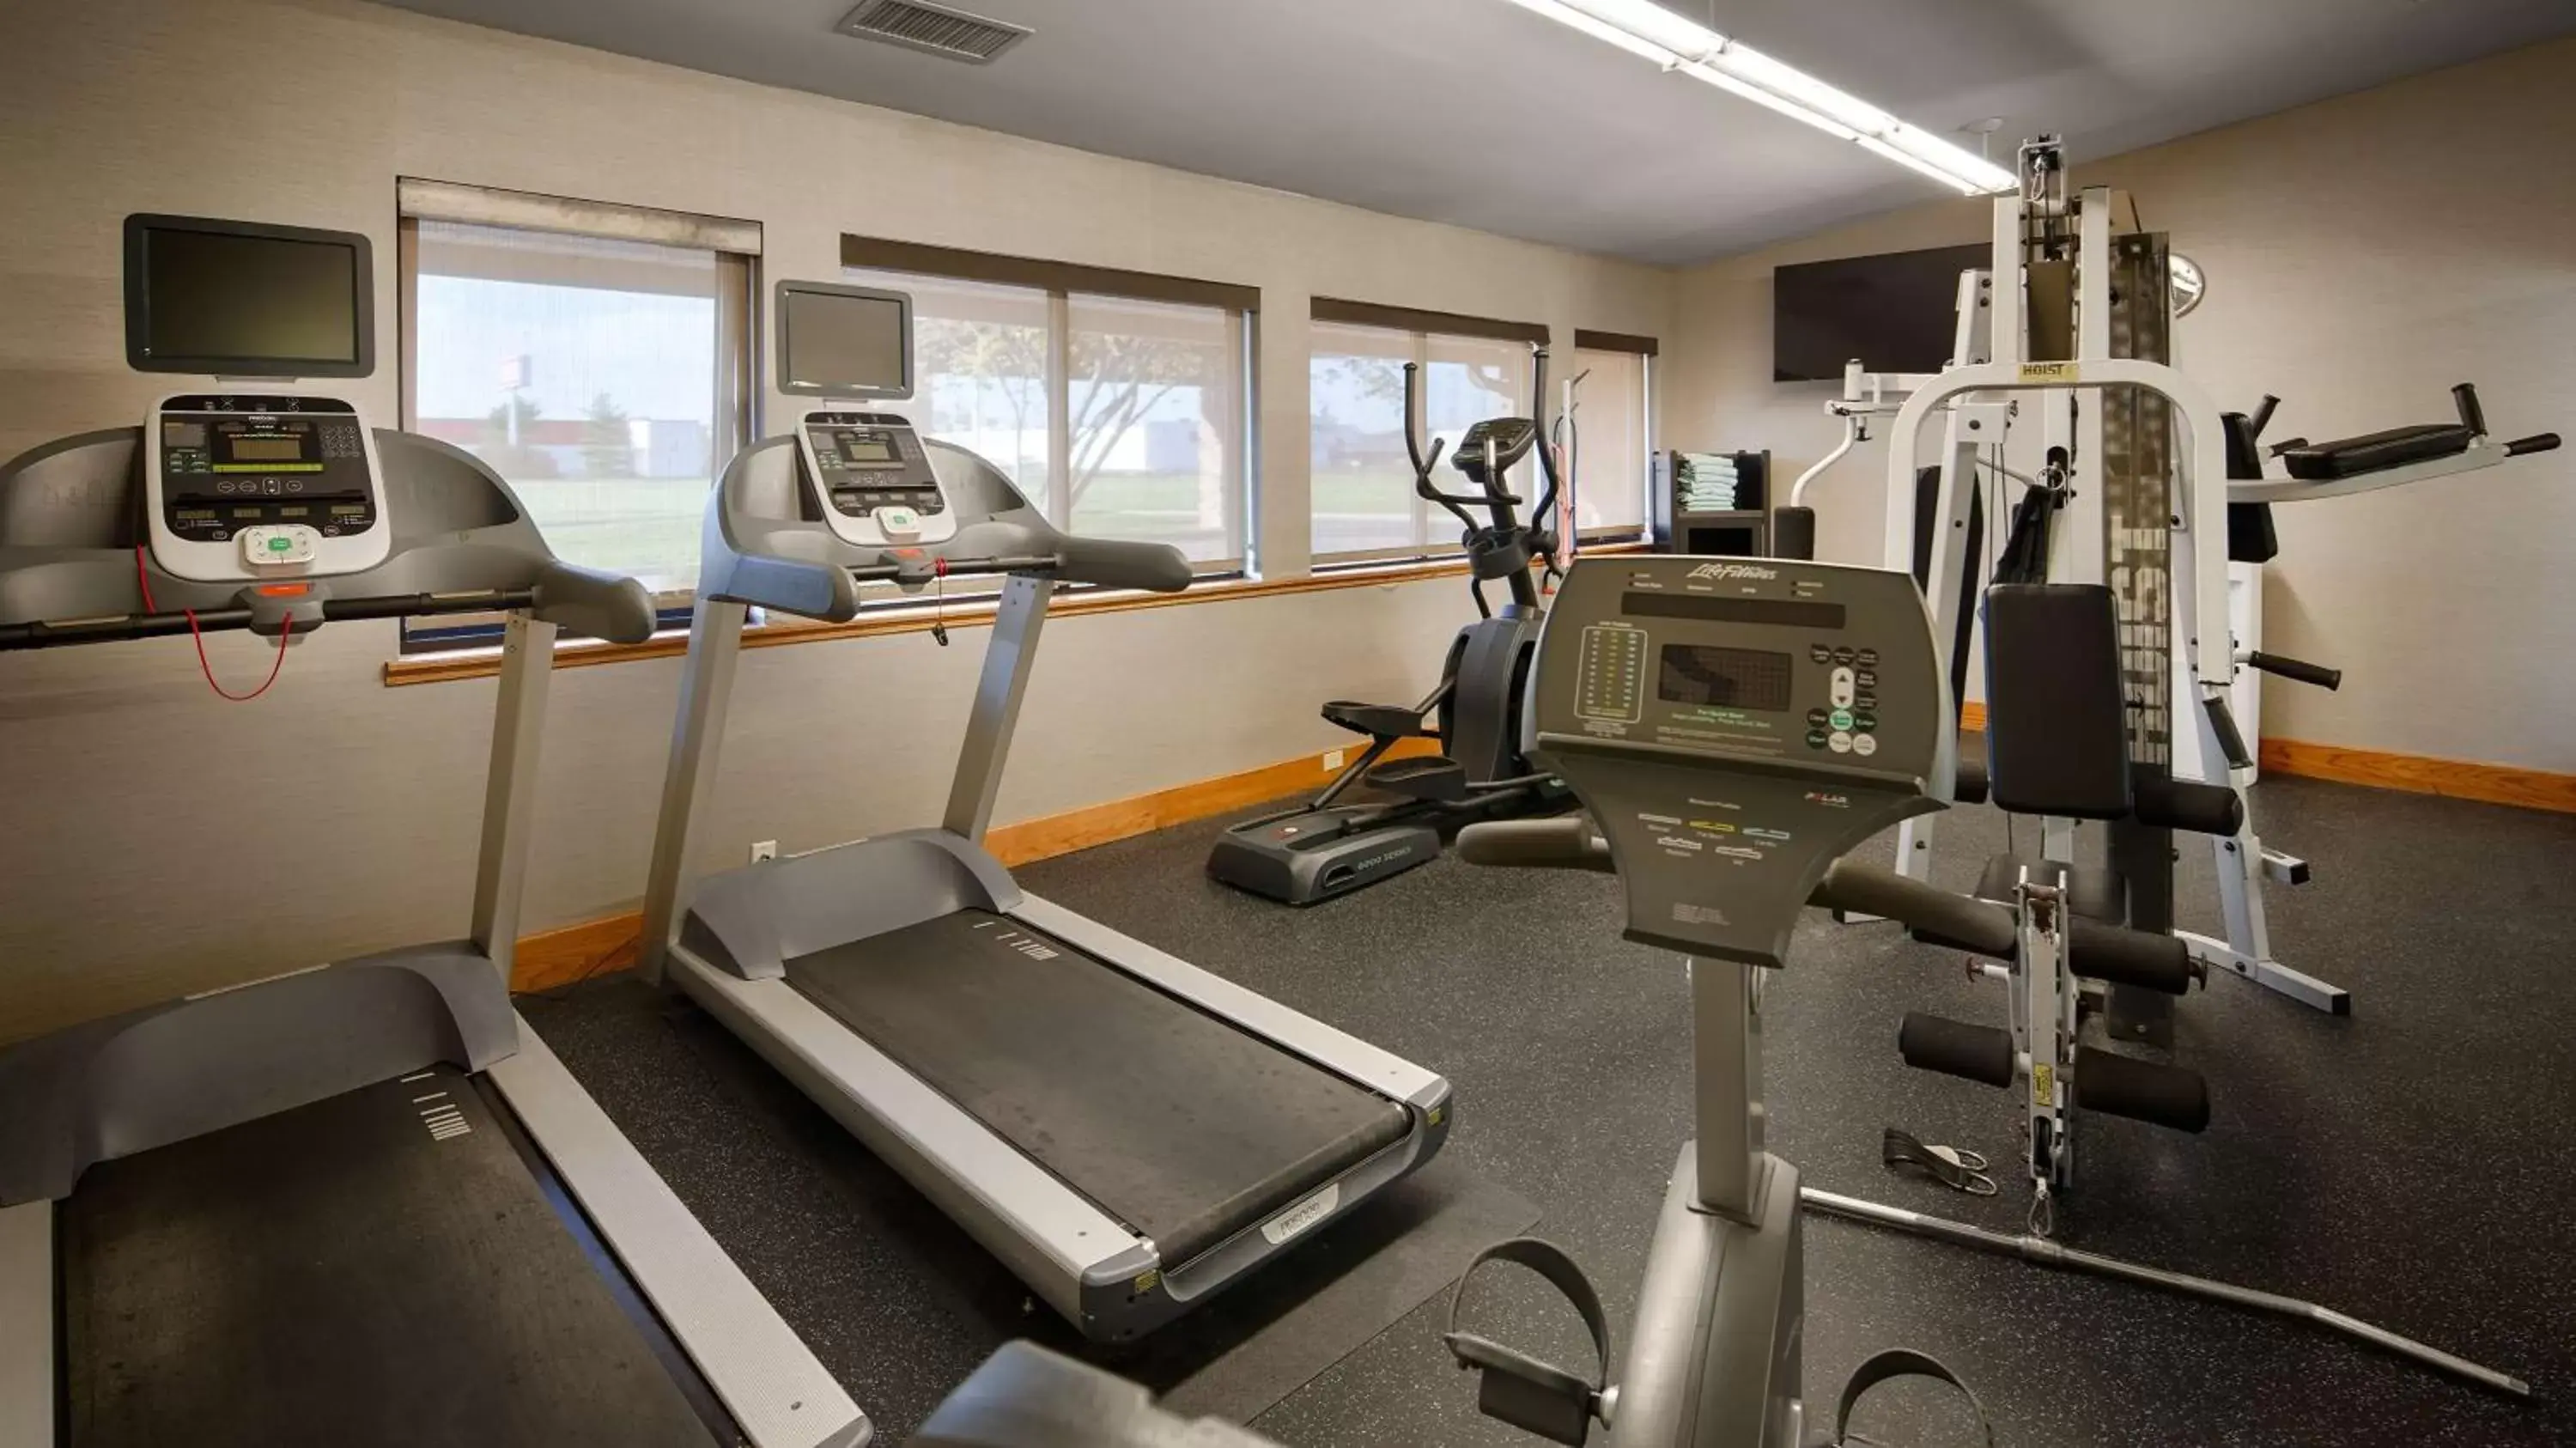 Fitness centre/facilities in Best Western Benton Harbor – St. Joseph